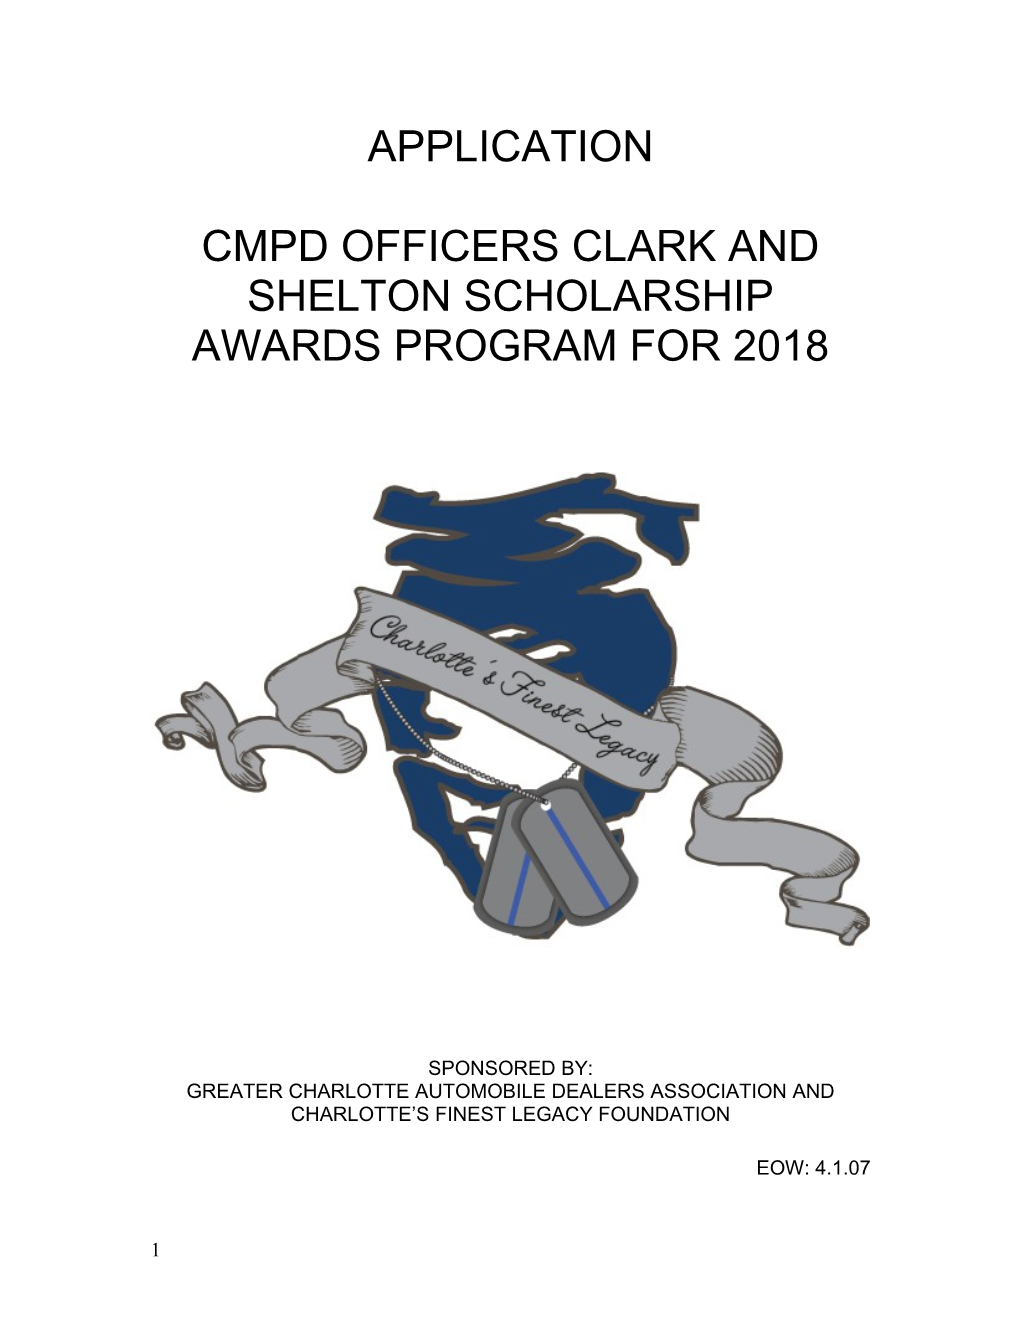 Cmpd Officers Clark and Shelton Scholarship Awards Program for 2018